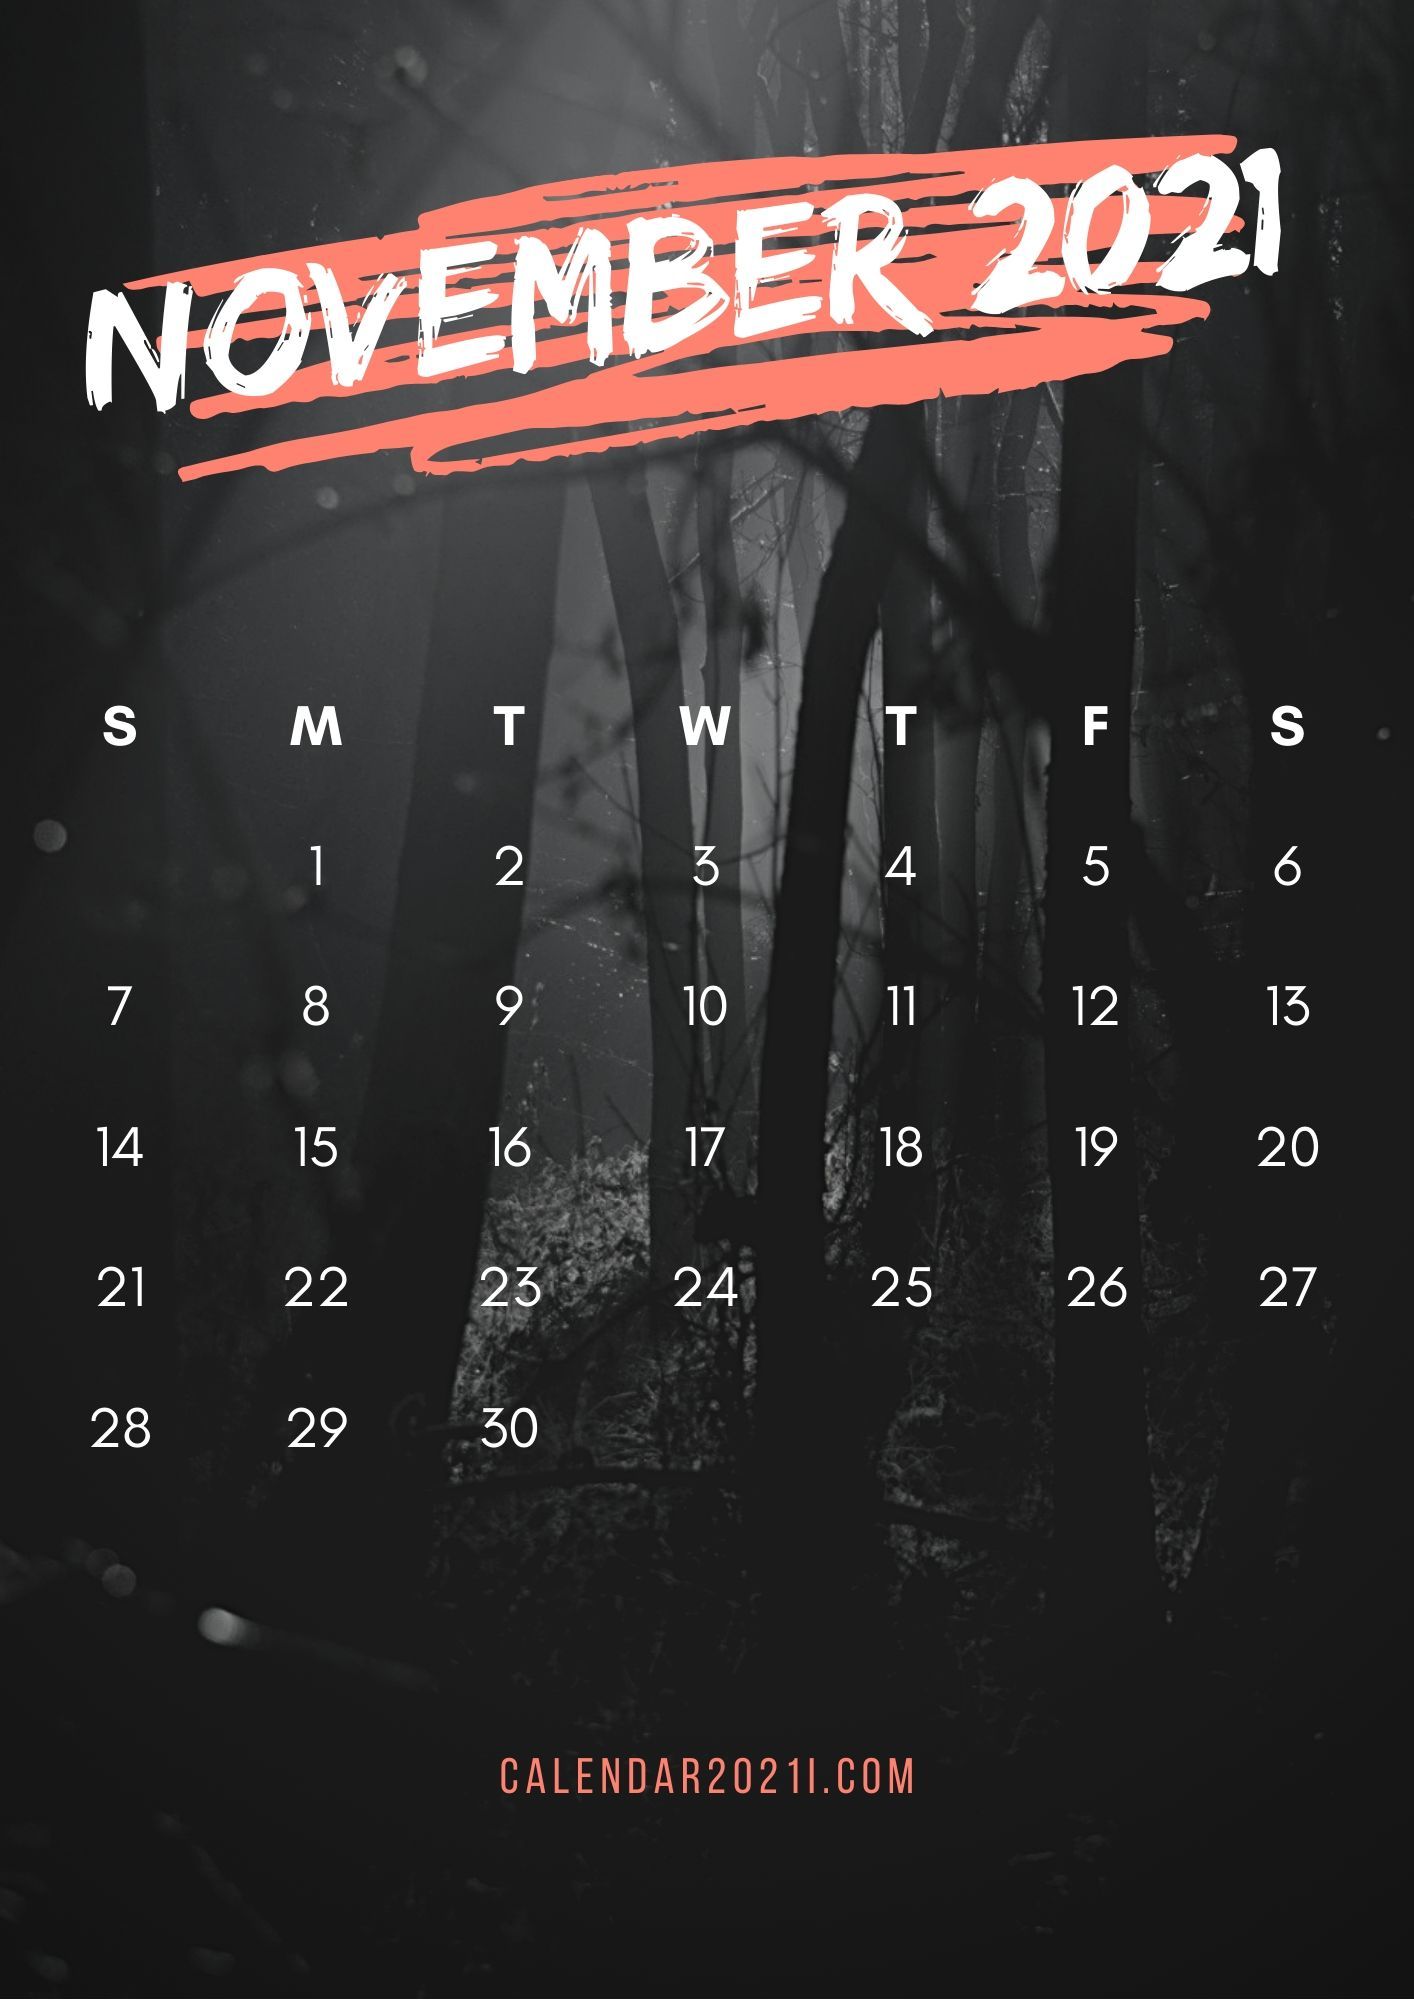 November 2021 Calendar iPhone HD Wallpaper. Calendar wallpaper, 2021 calendar, Free printable calendar